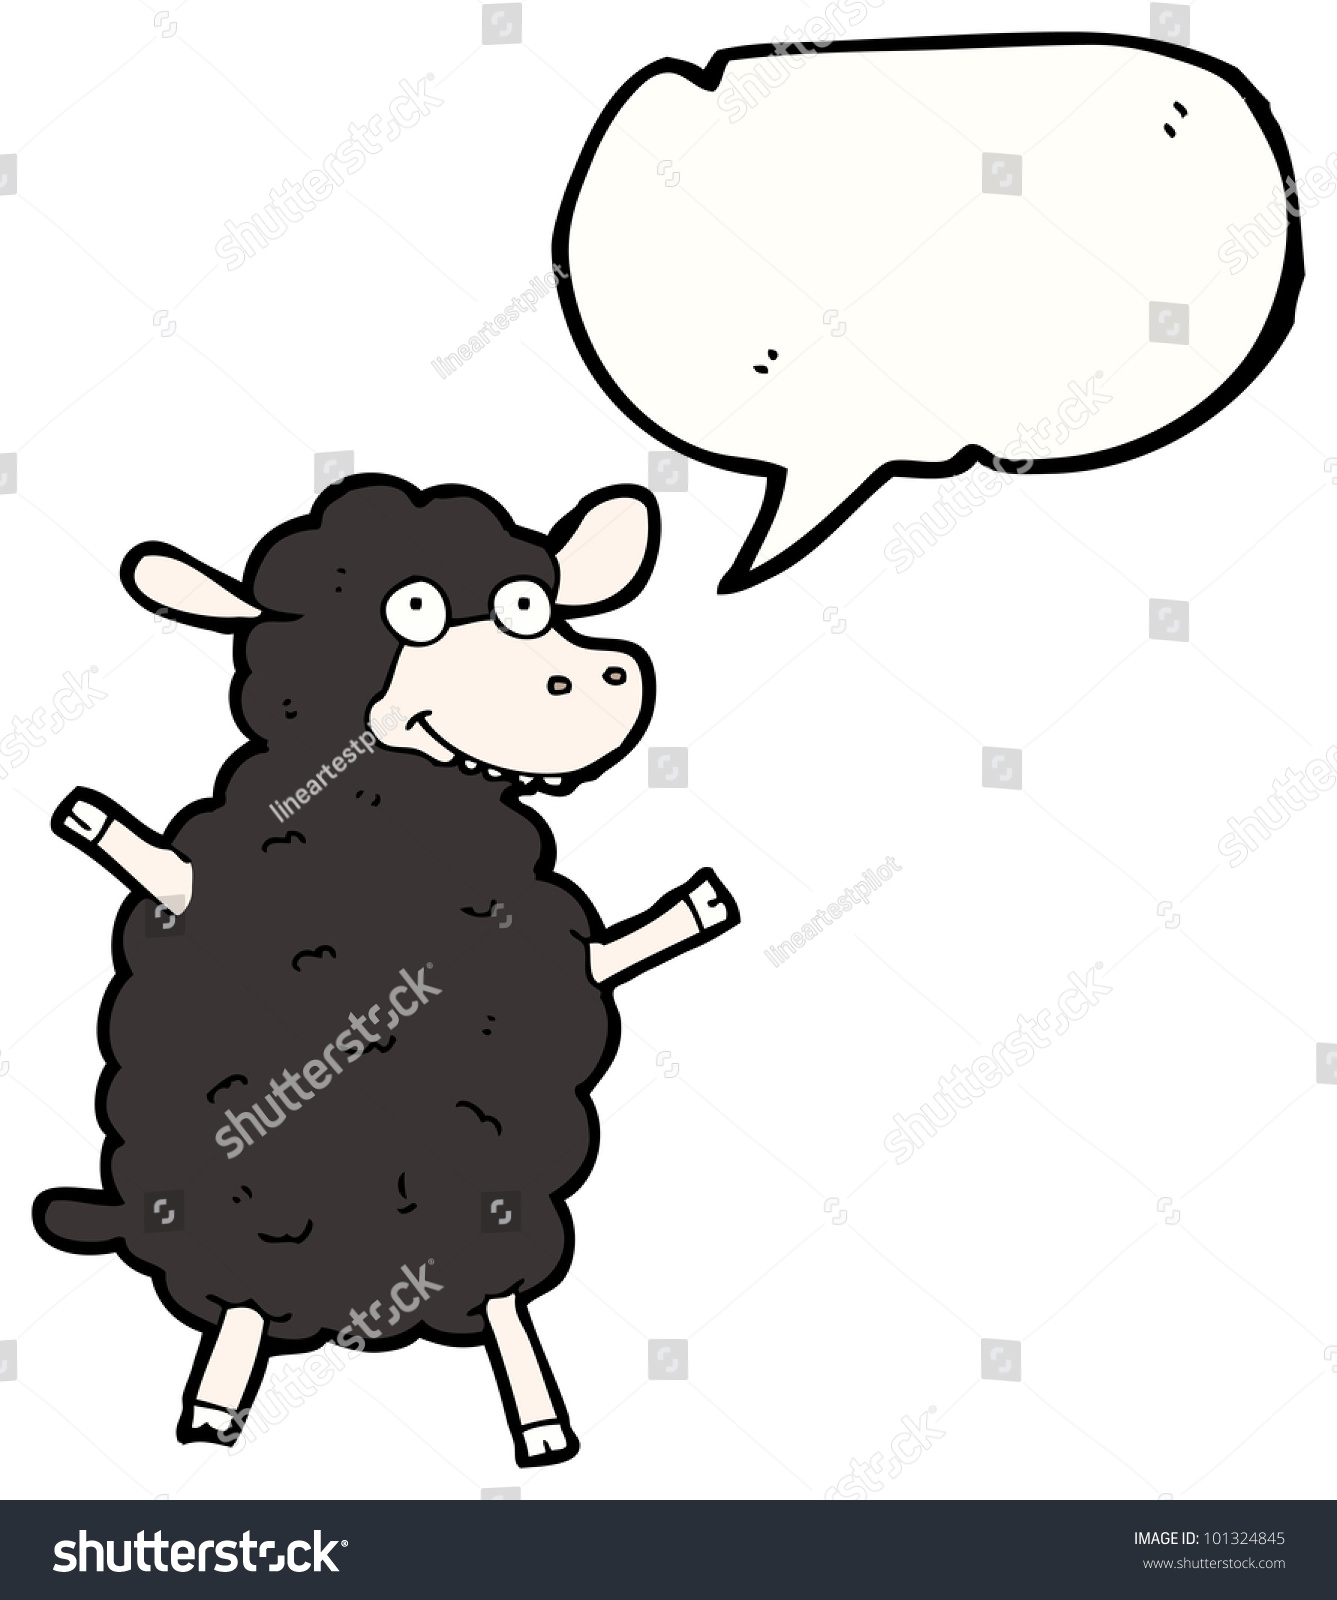 Cartoon Black Sheep Stock Photo 101324845 : Shutterstock